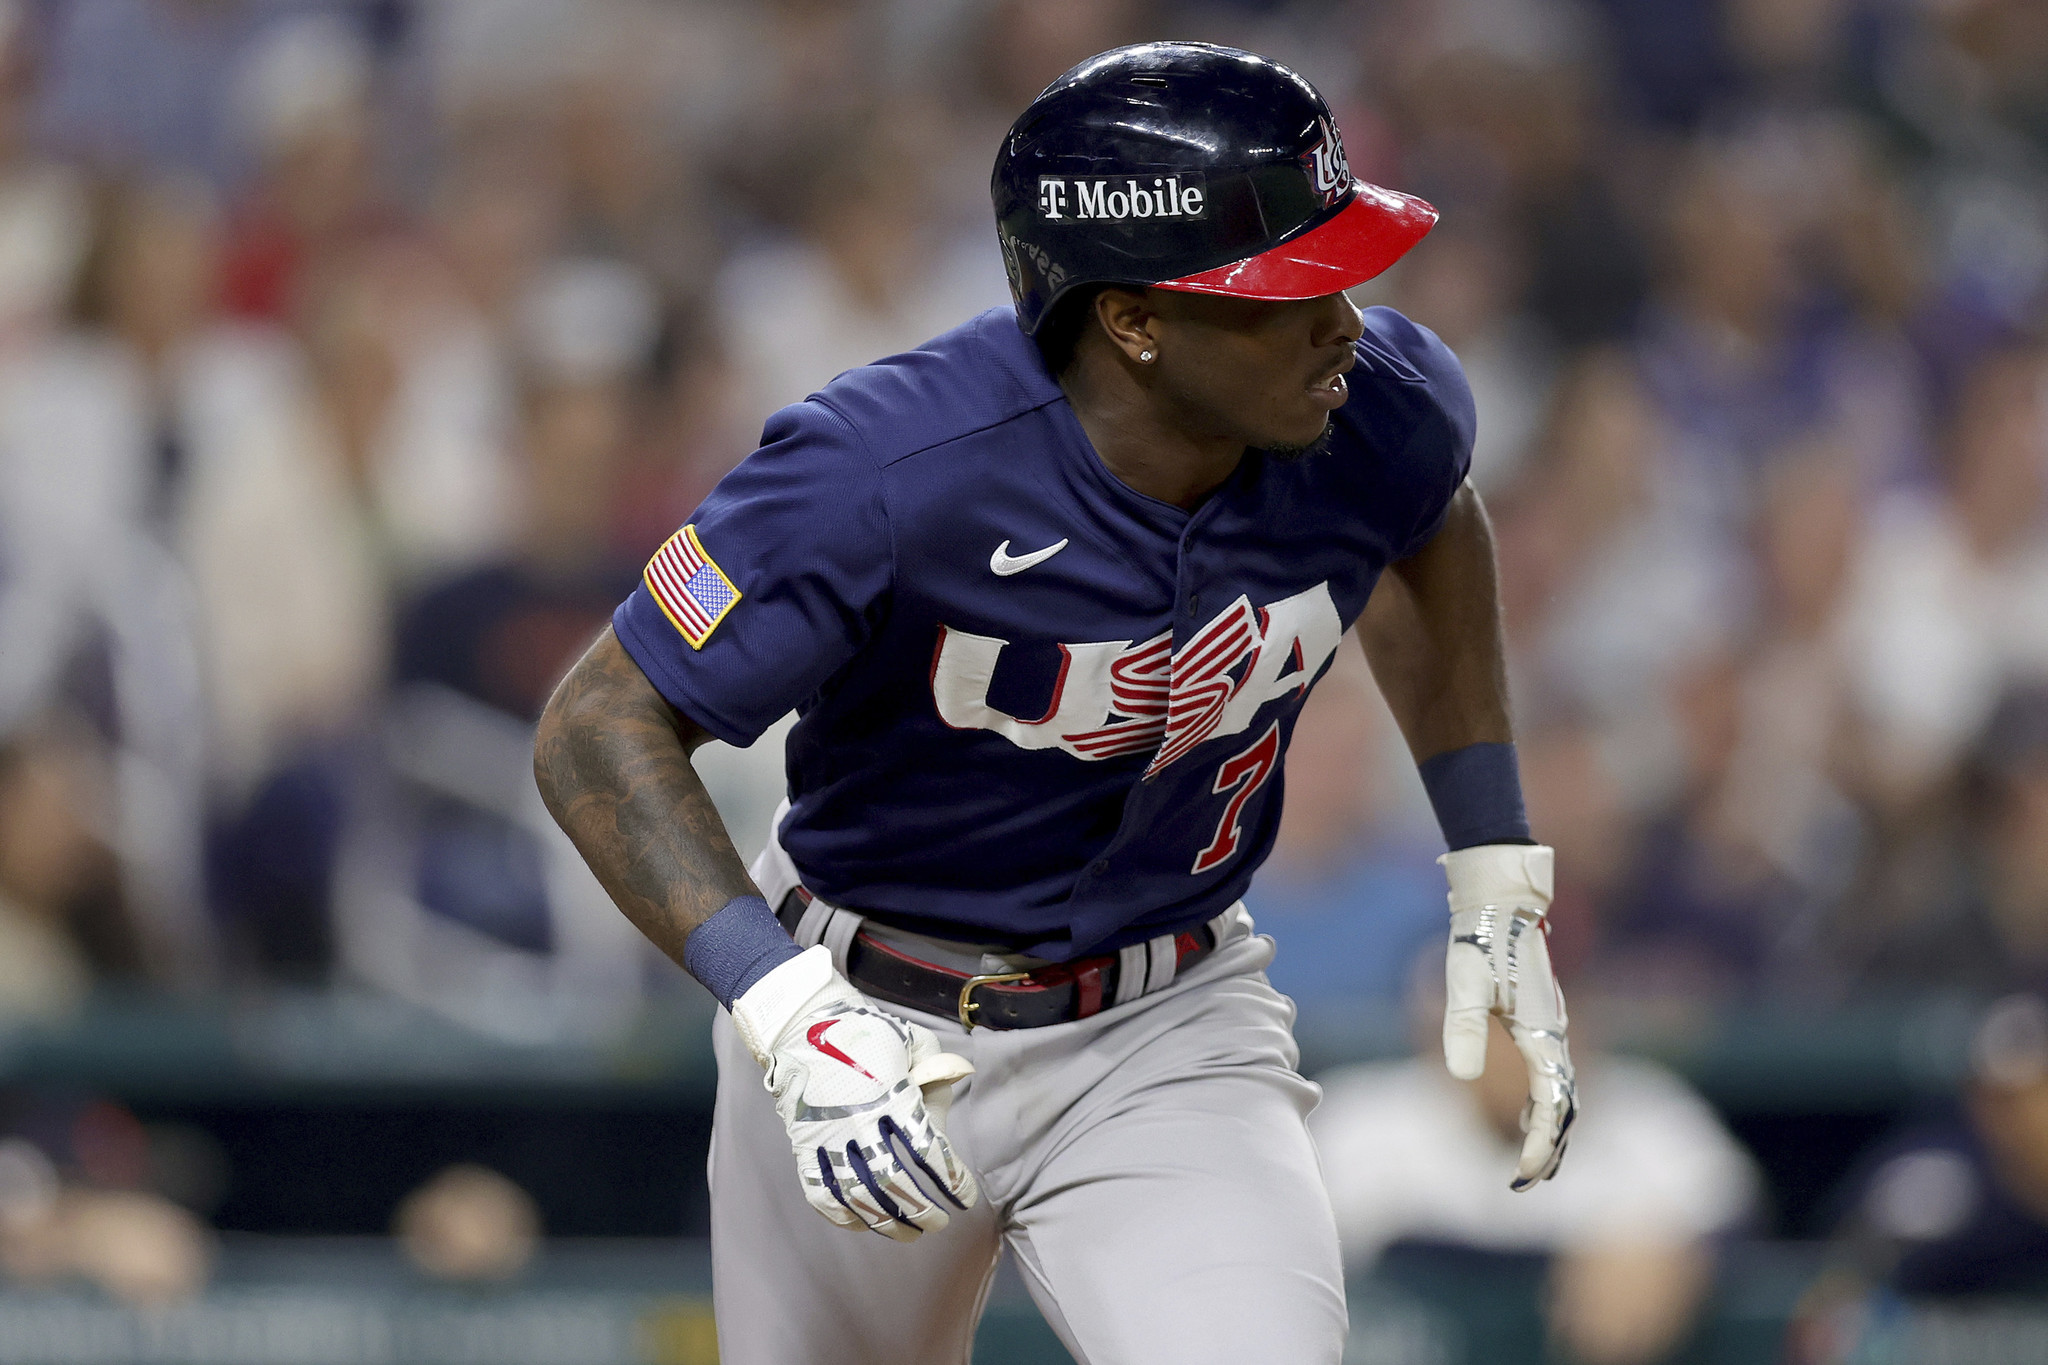 Turner's slam lifts USA over Venezuela into World Baseball Classic